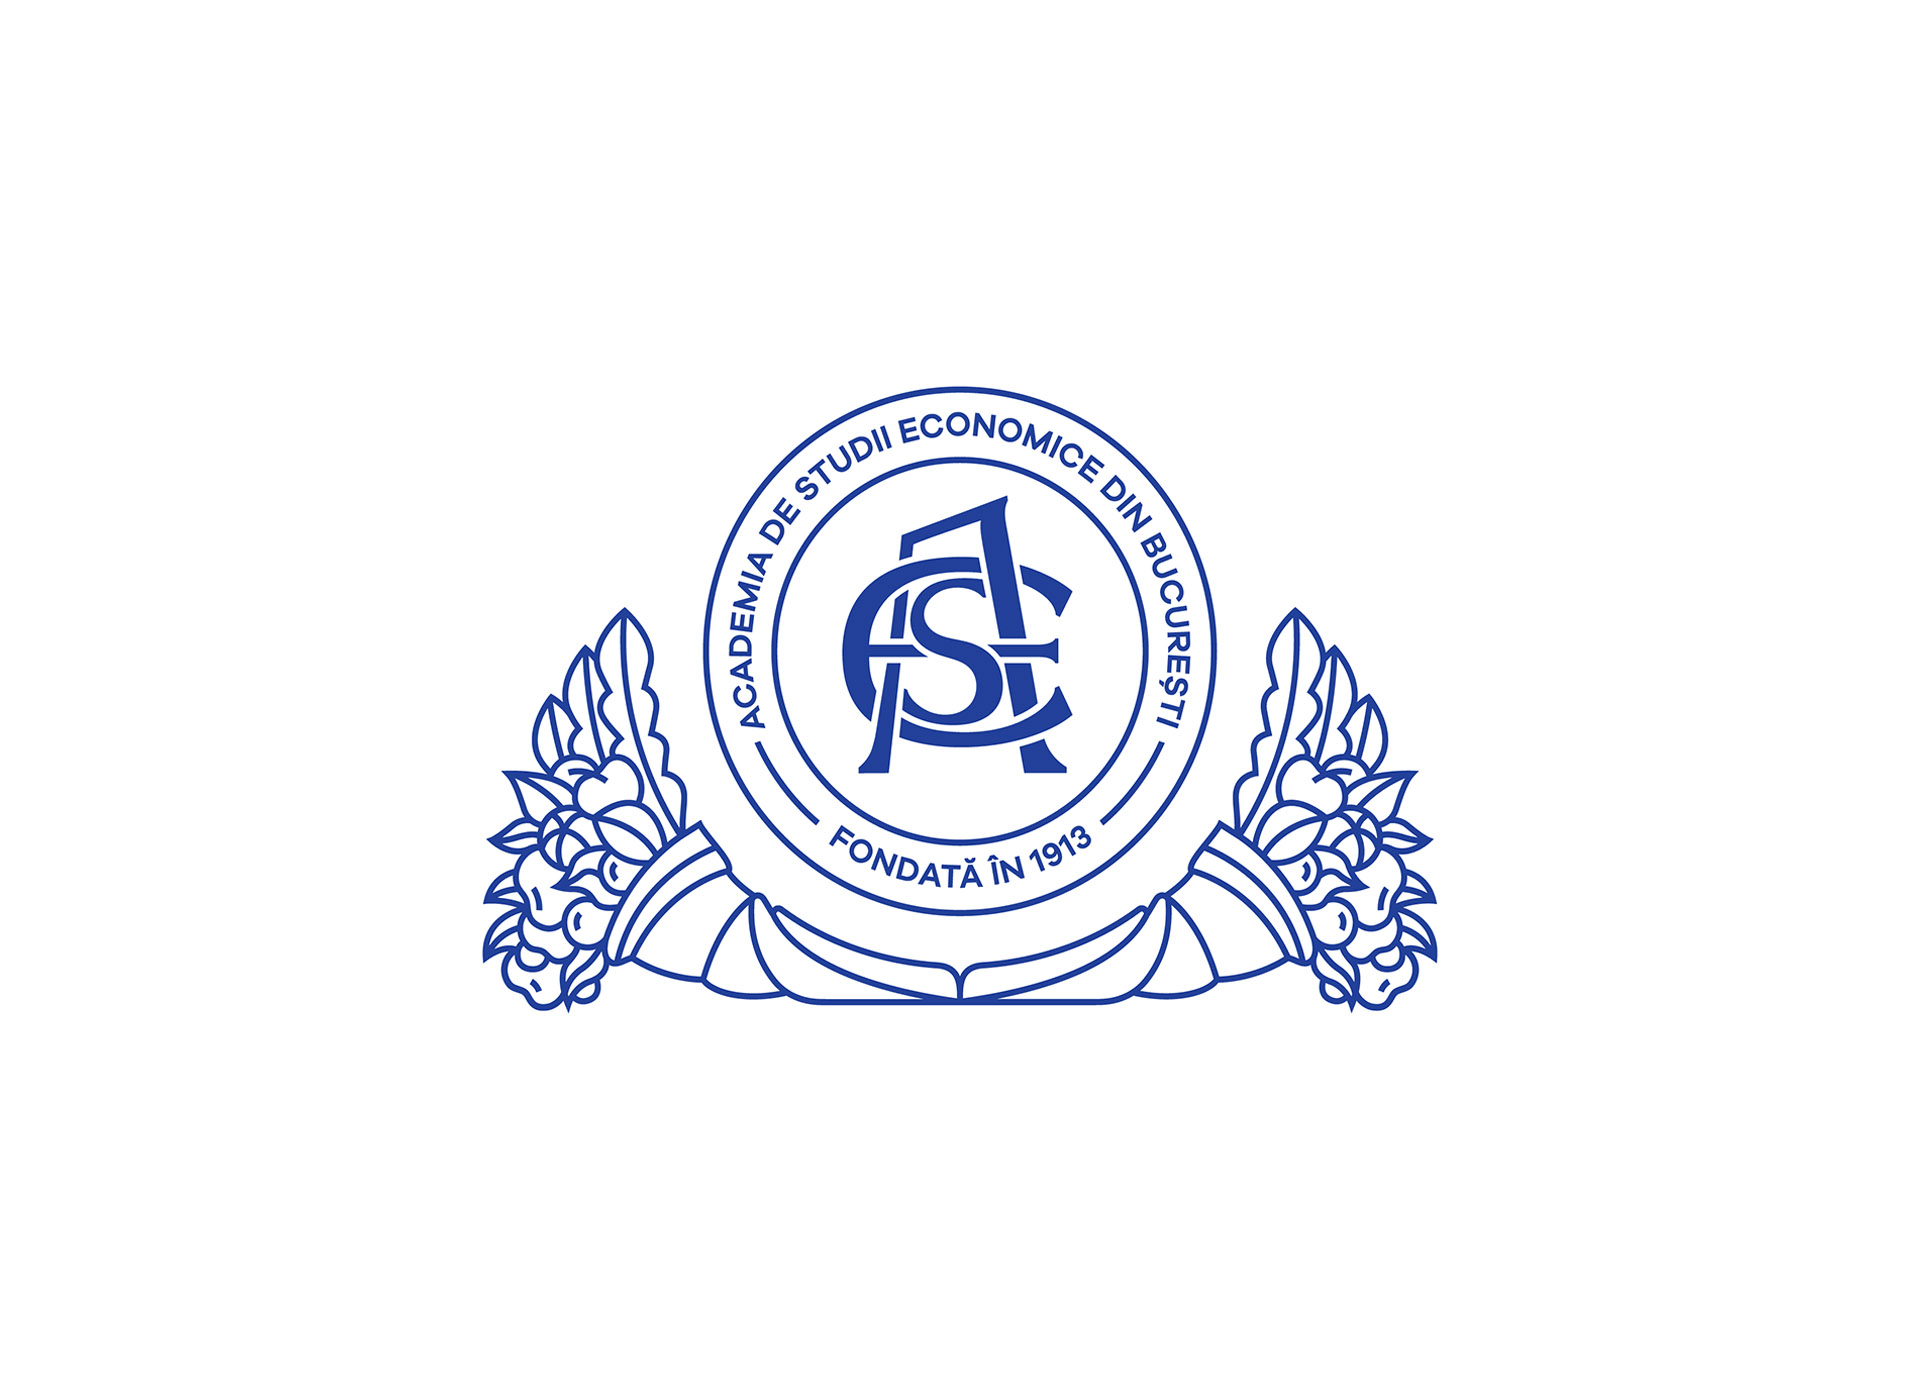 Academia de Studii Economie din Bucuresti portfolio inoveo logo pozitiv